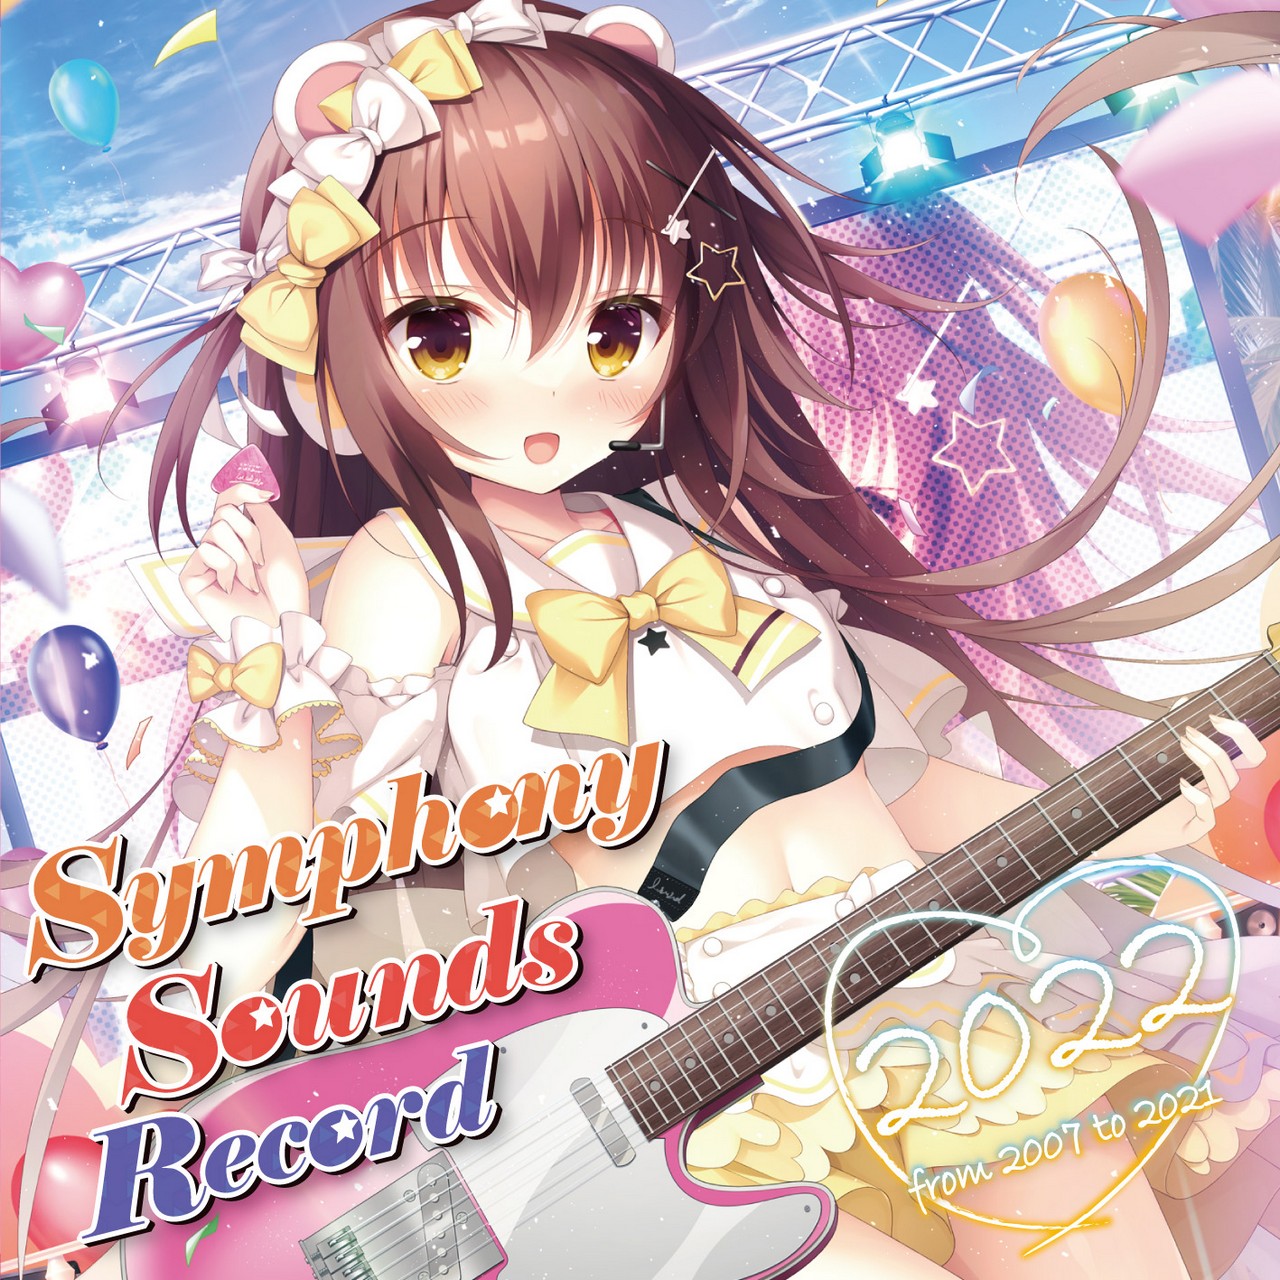 Shiromochi Sakura Animal Ears Disc Cover Guitar Headphone